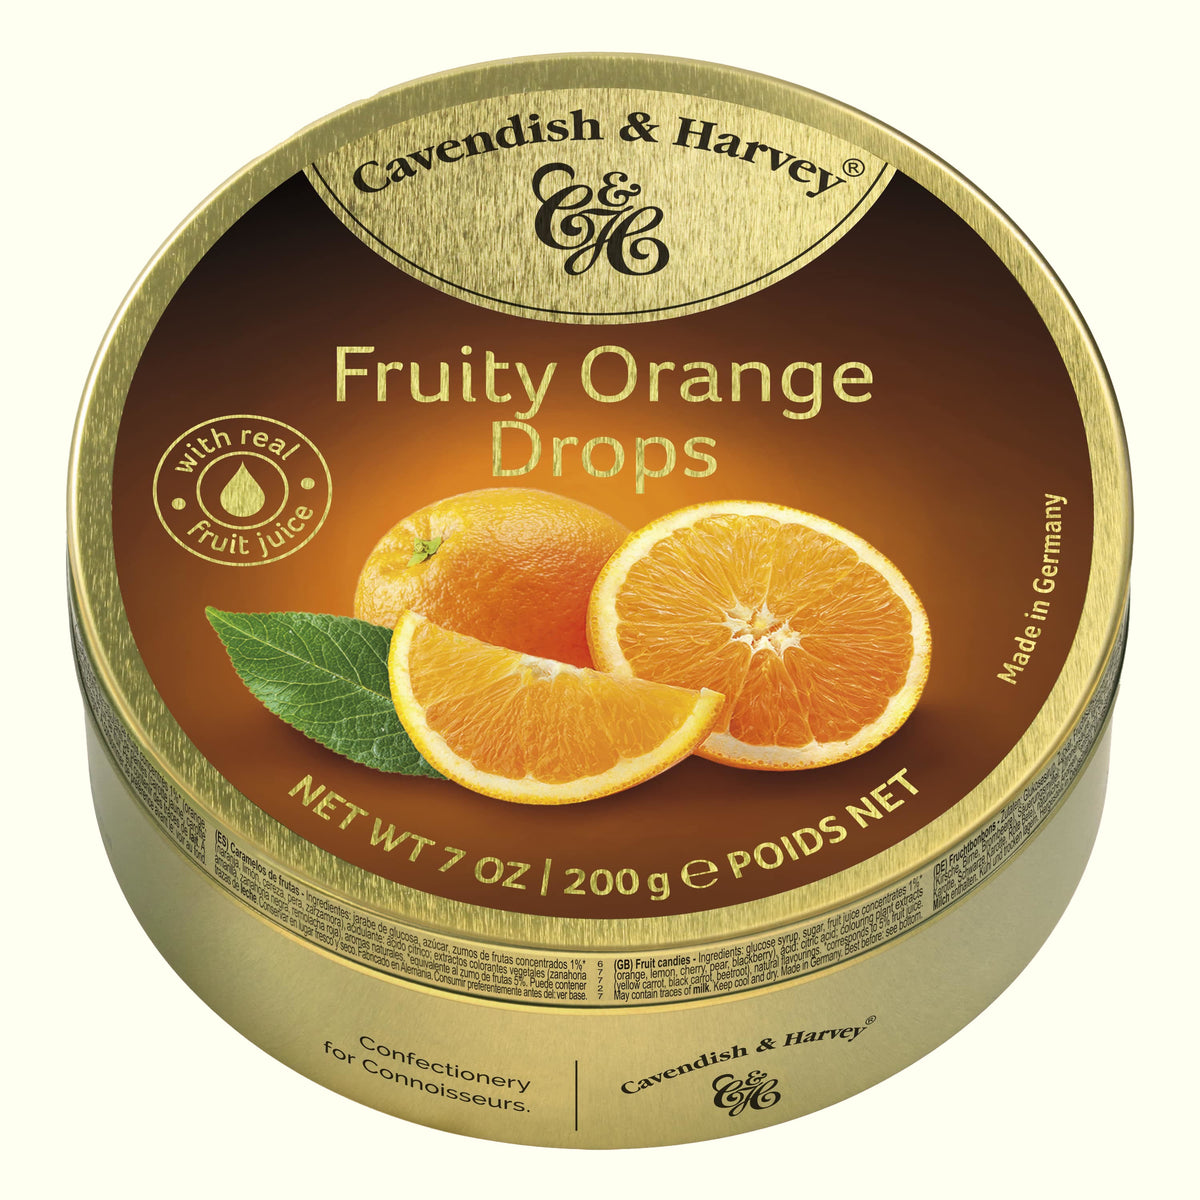 Cavendish & Harvey Fruity Orange Drops 200g